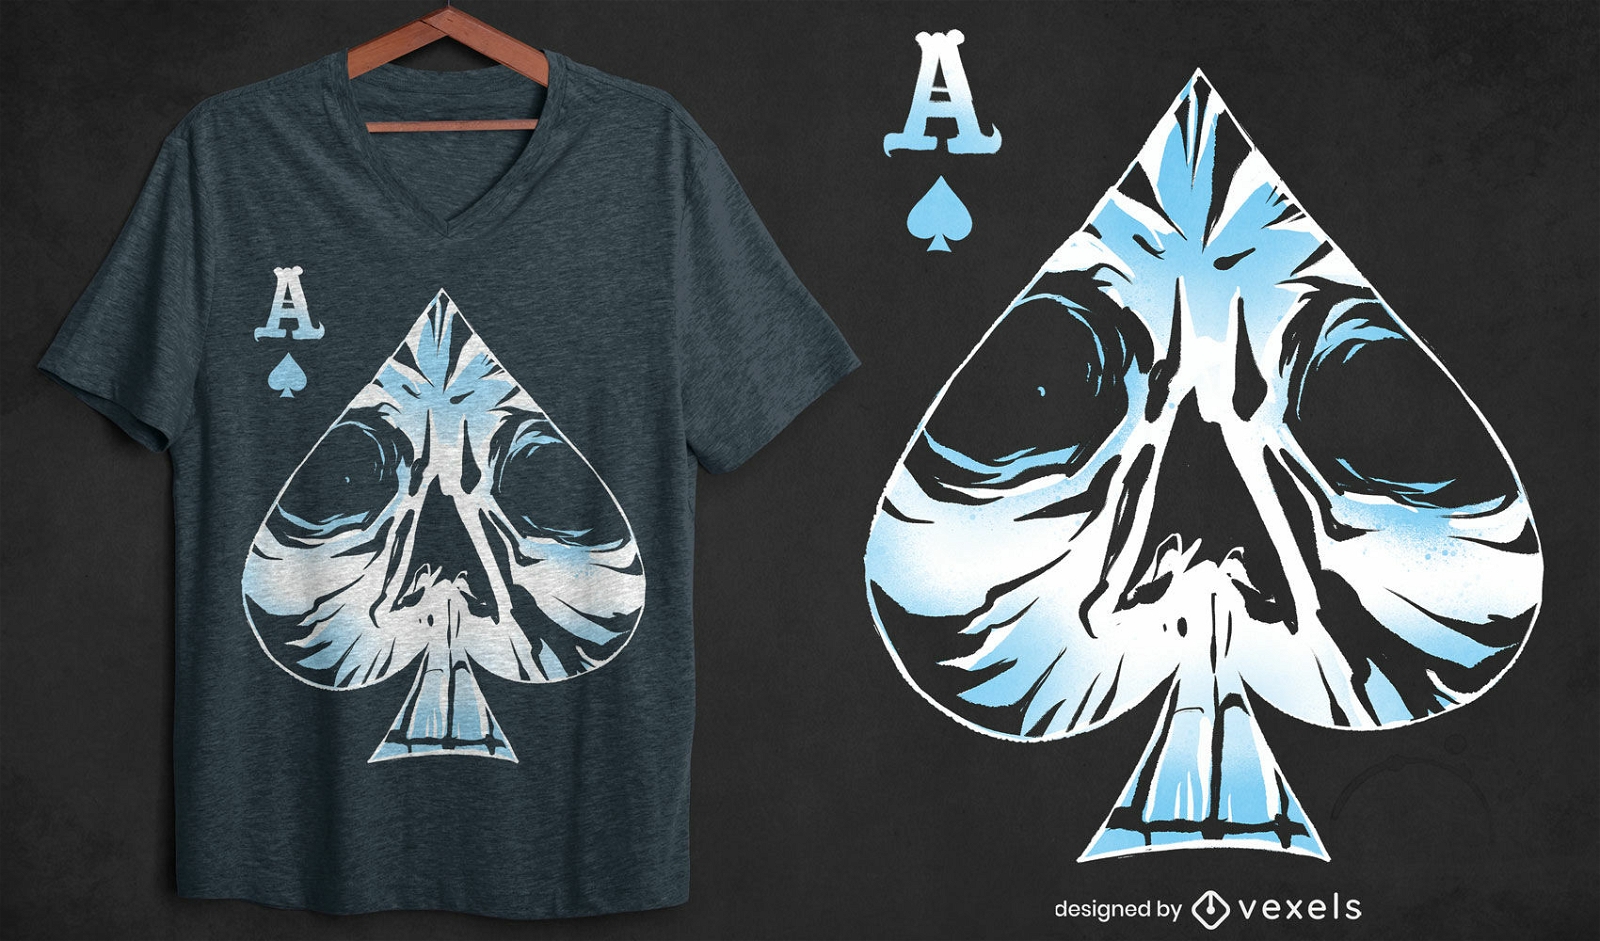 Ace of spades card skull t-shirt design